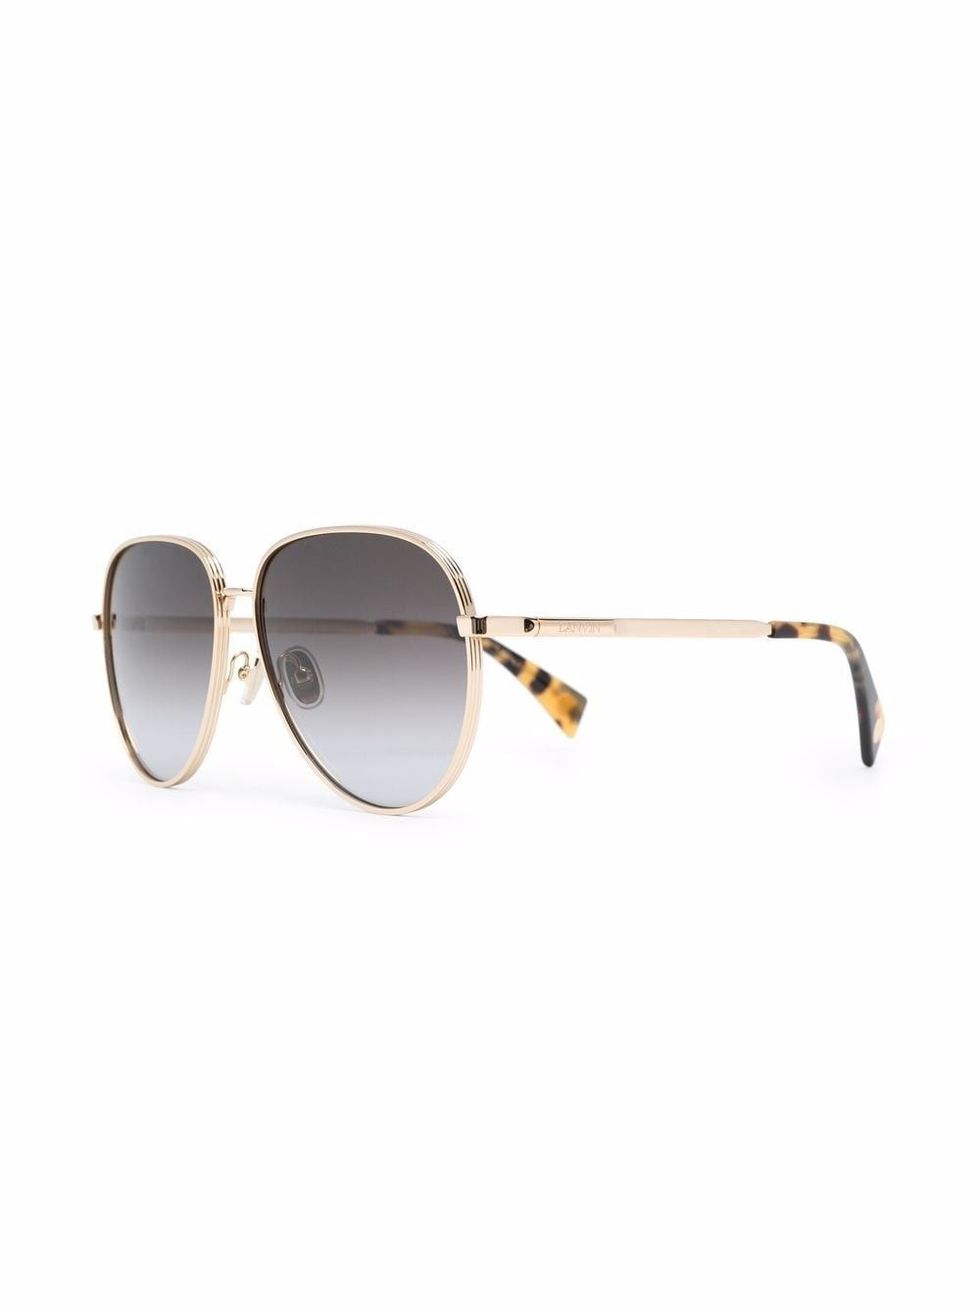 Pilot-frame gradient sunglasses